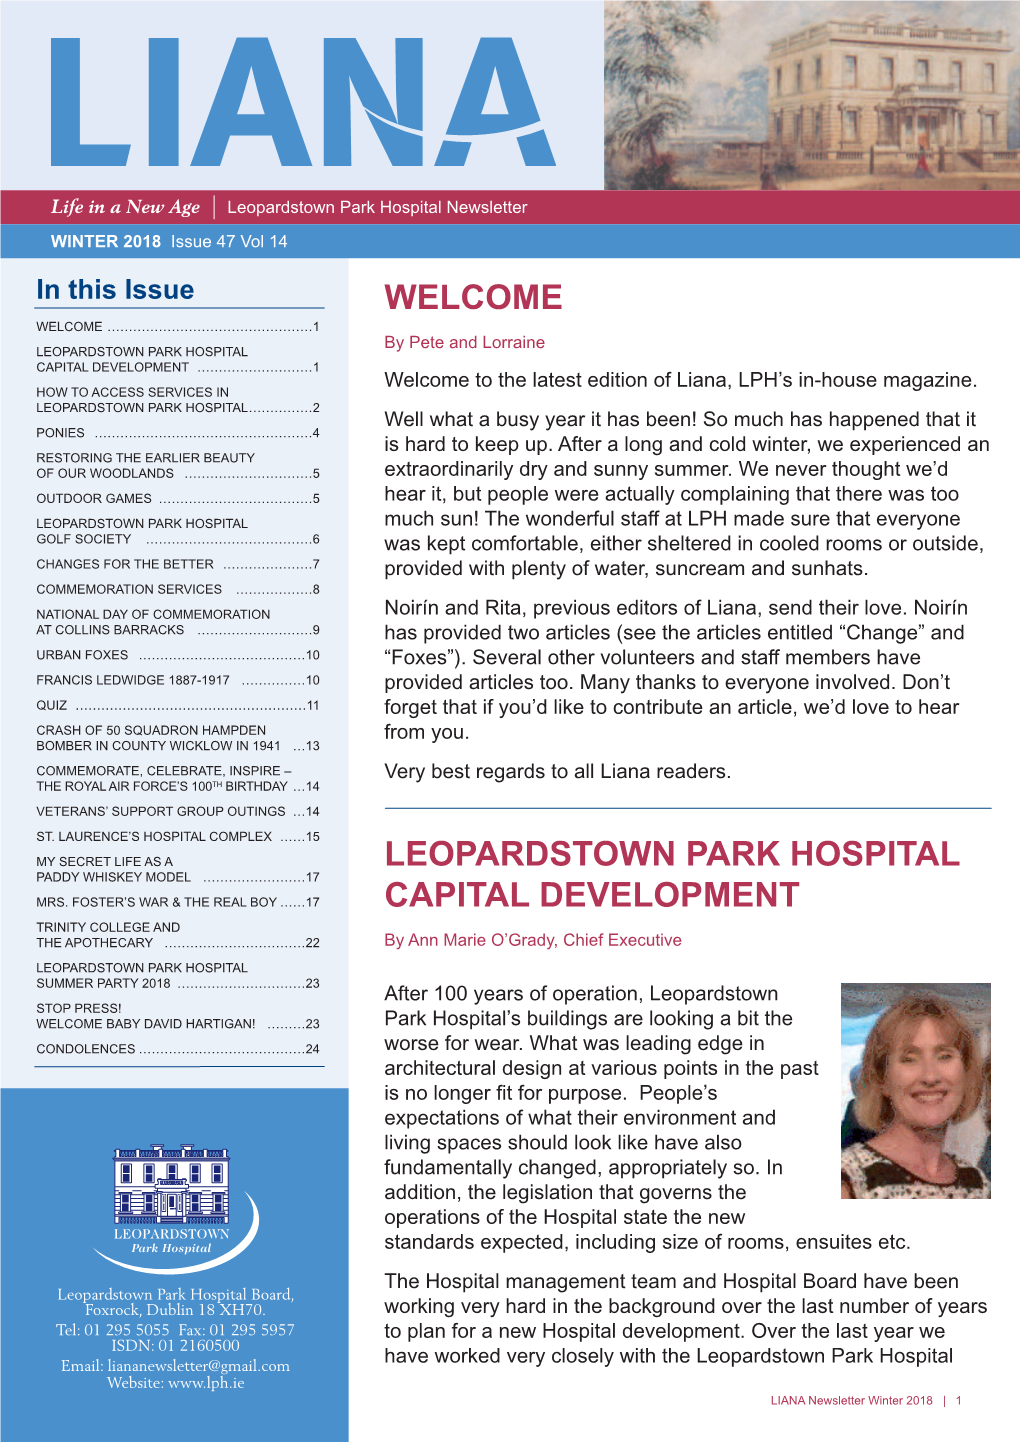 Welcome Leopardstown Park Hospital Capital Development